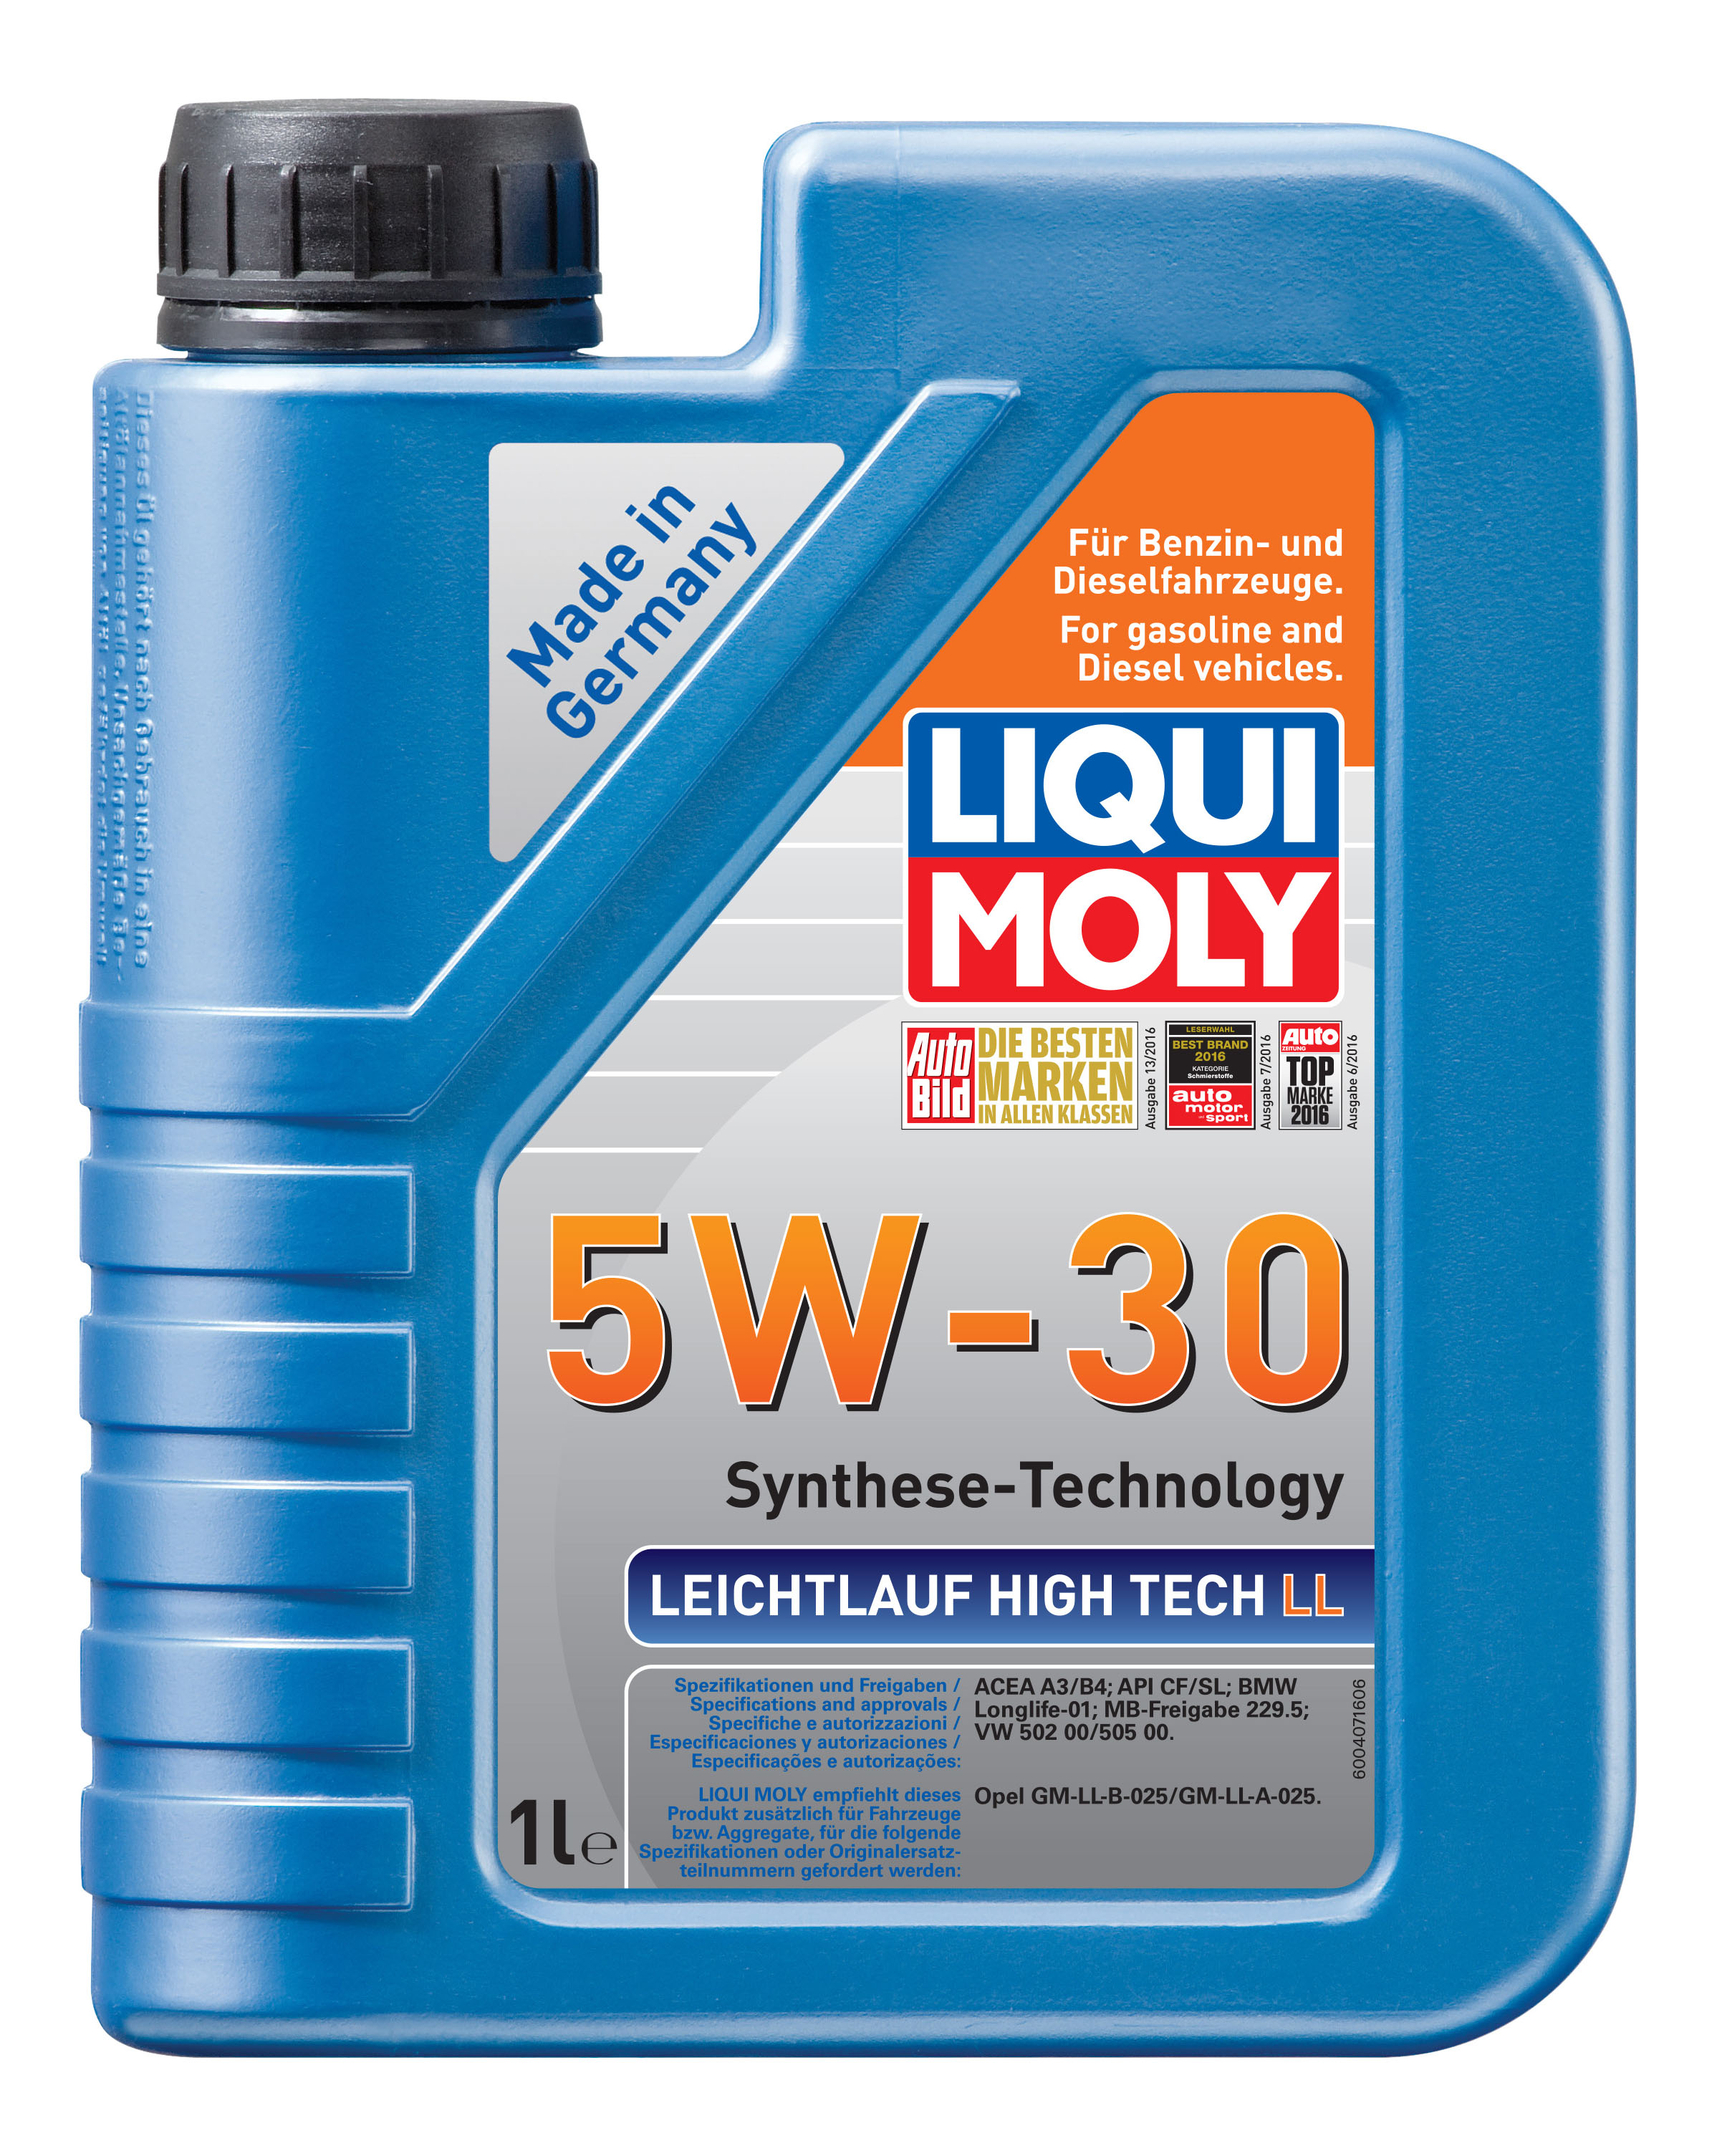 LIQUI MOLY Leichtlauf High Tech LL, 5W/30, синтетика, 1л, Германия